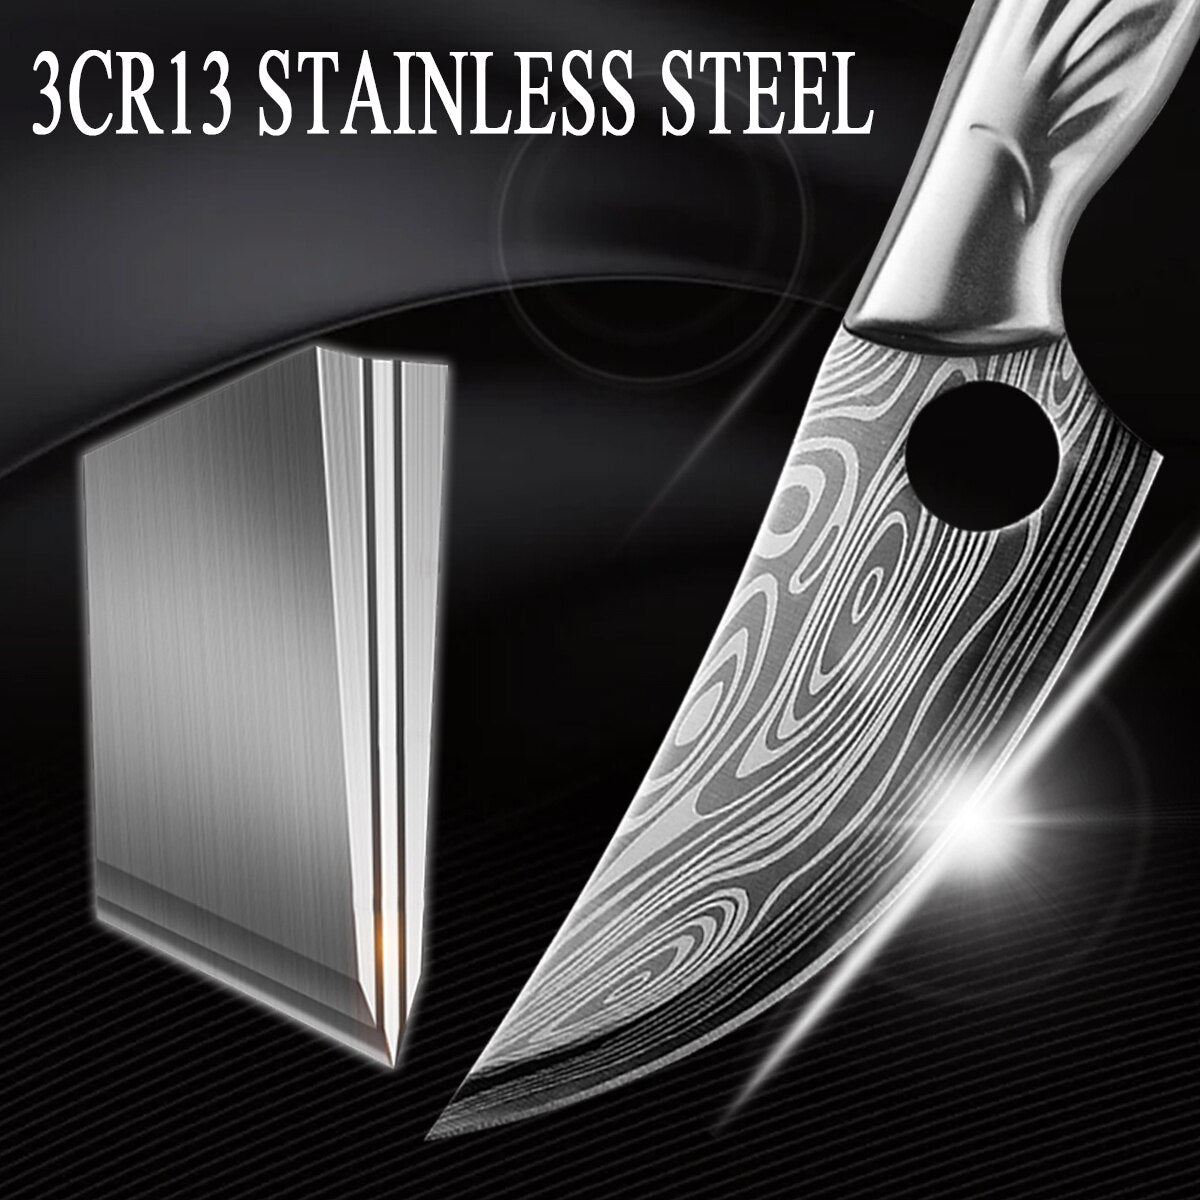 KD Boning Knife 5.5 Inch Laser Pattern Stainless Steel Kitchen Knife Butcher Slicing Meat Cutter Tools